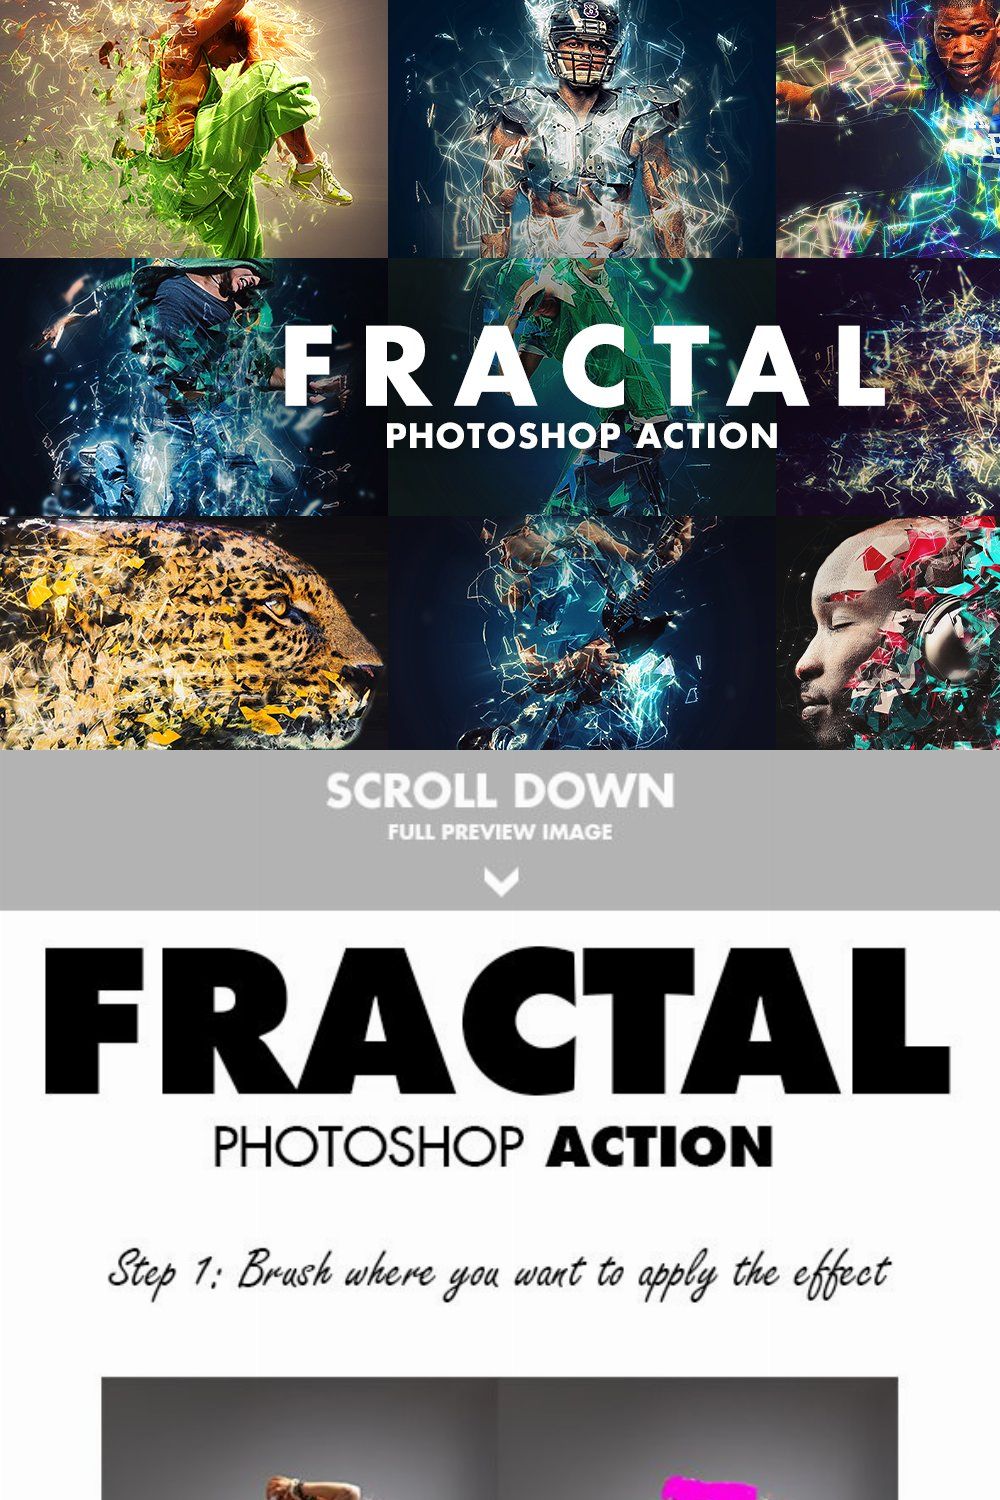 Fractal Photoshop Action pinterest preview image.